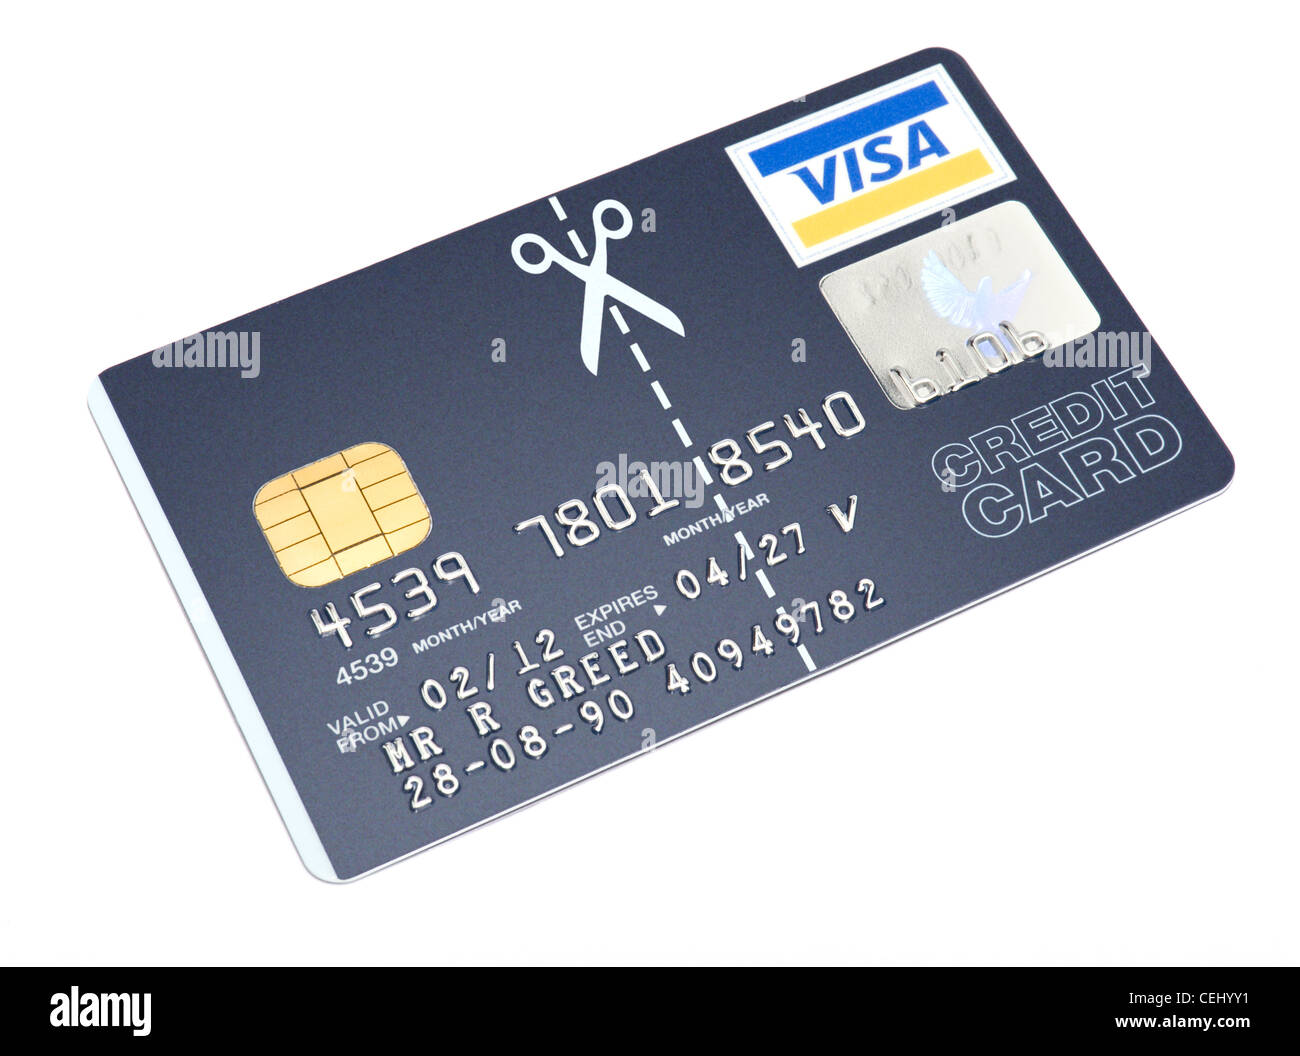 Scissors cutting up a visa credit card Stock Photo